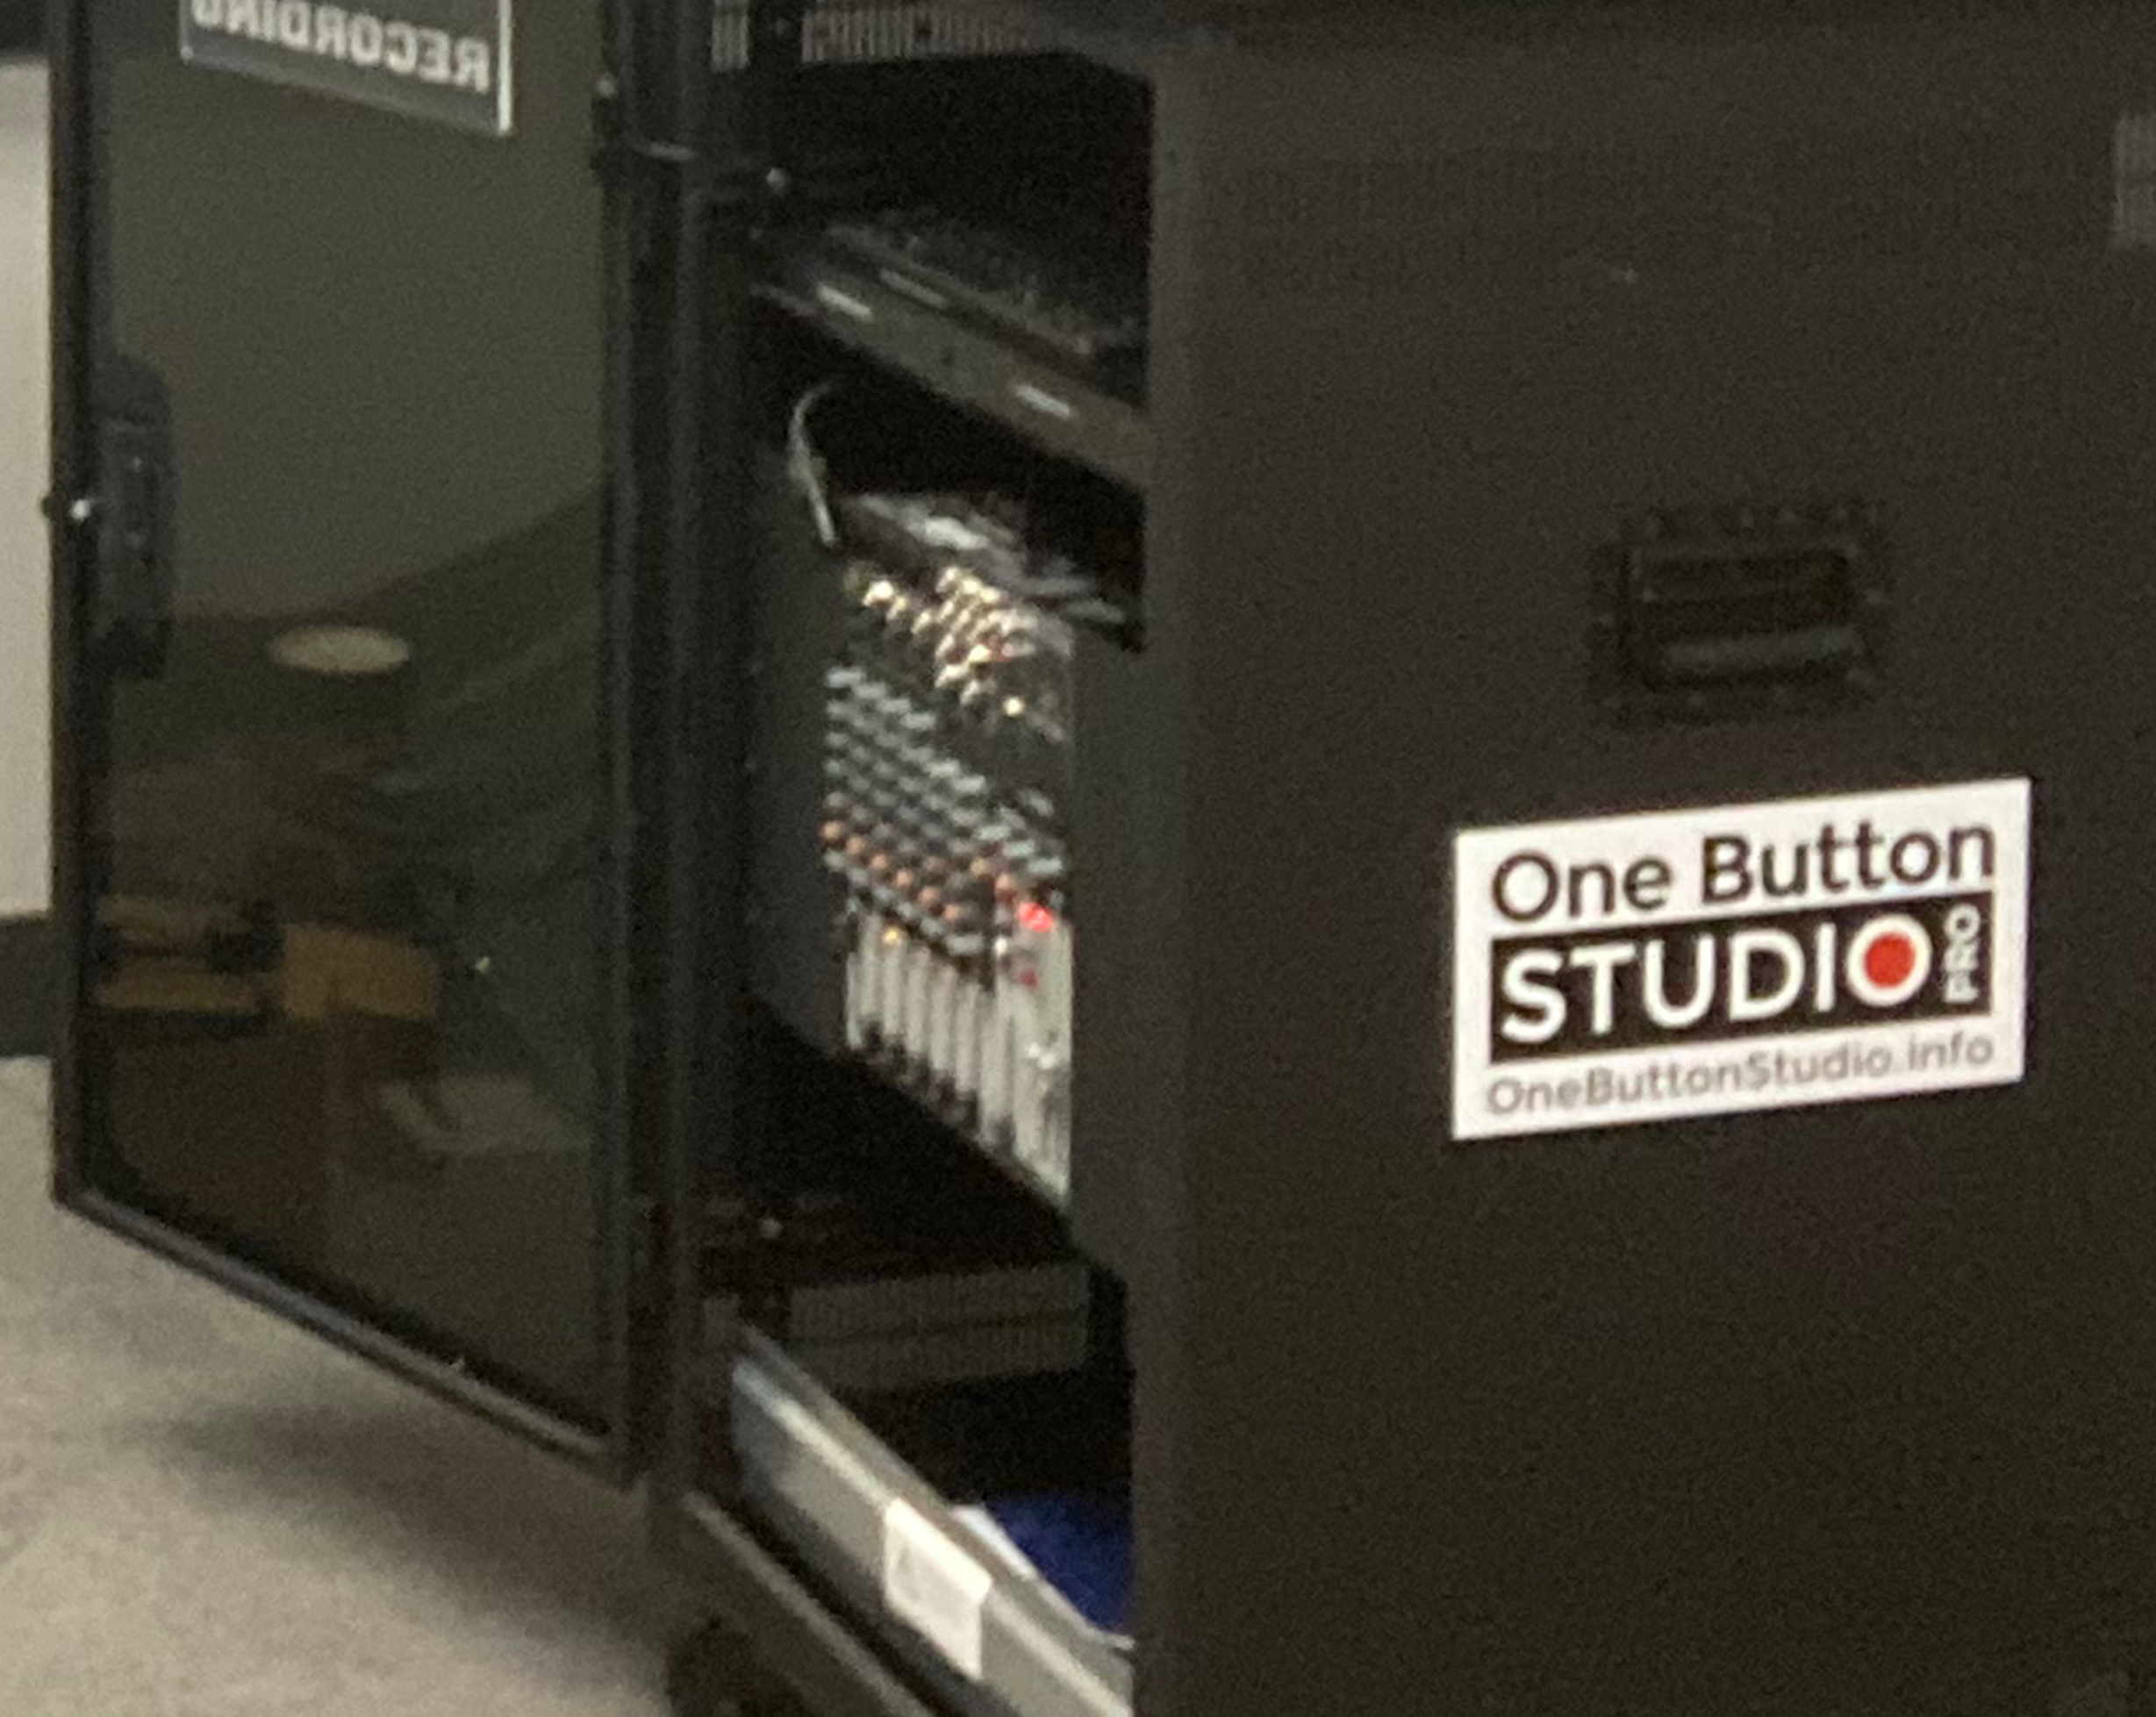 StudioMatic: One Button Studio Pro Kit